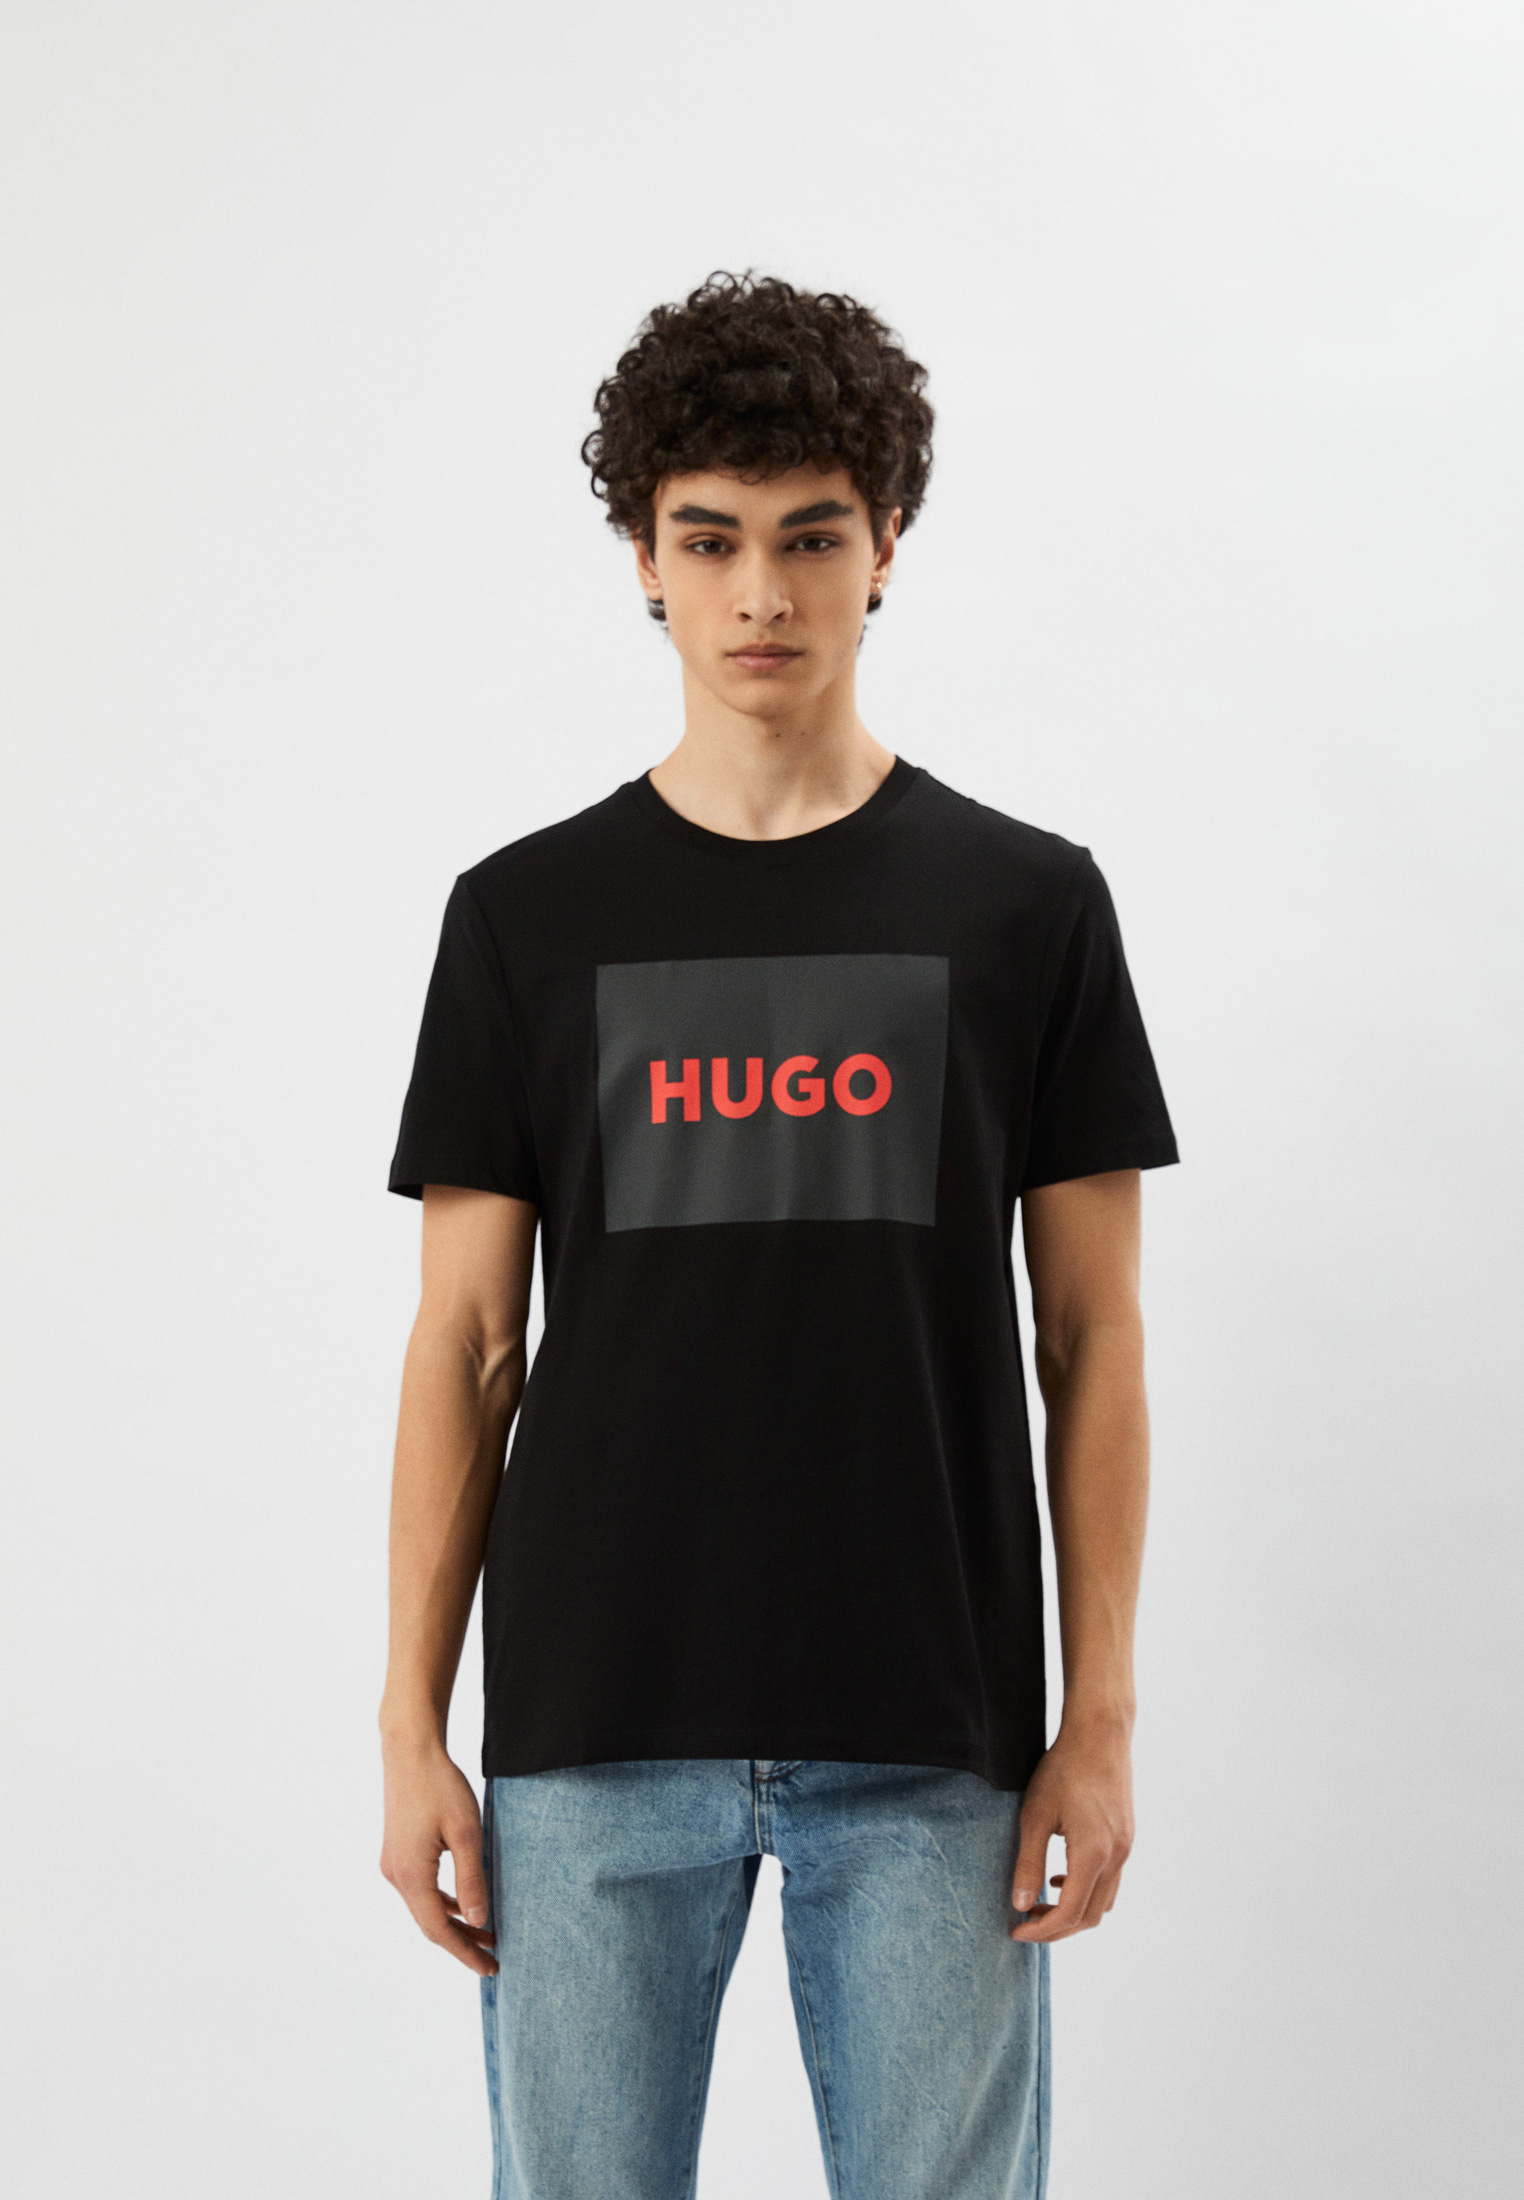 Hugo black